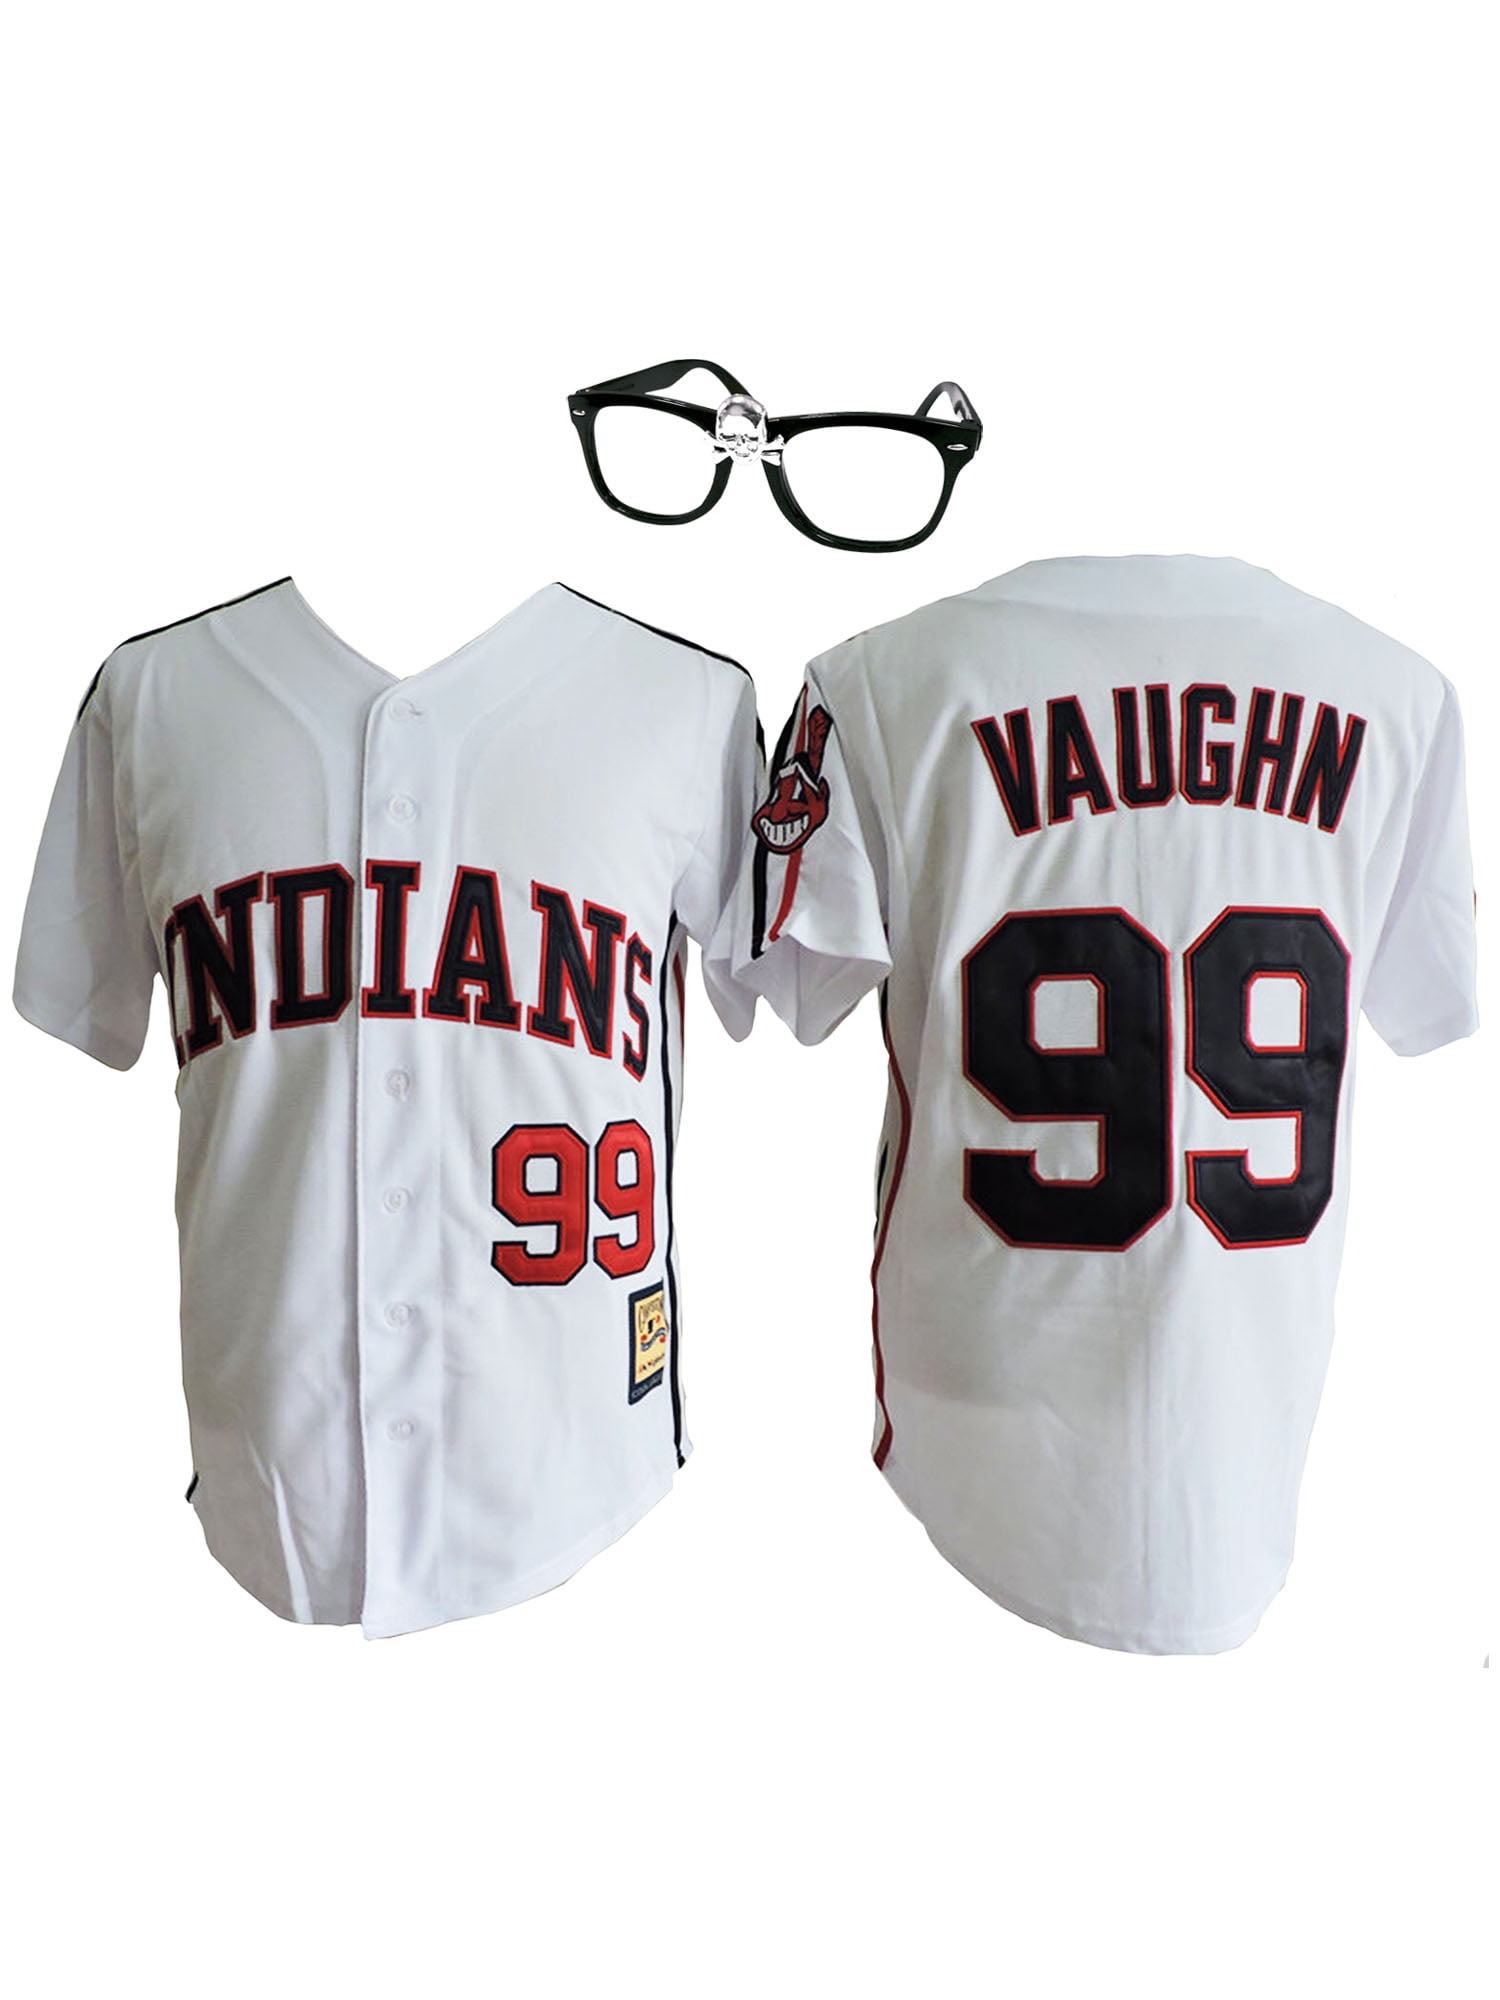 Rick Vaughn Adult Costume Jersey Skull Glasses Wild Thing Major League  Movie #99